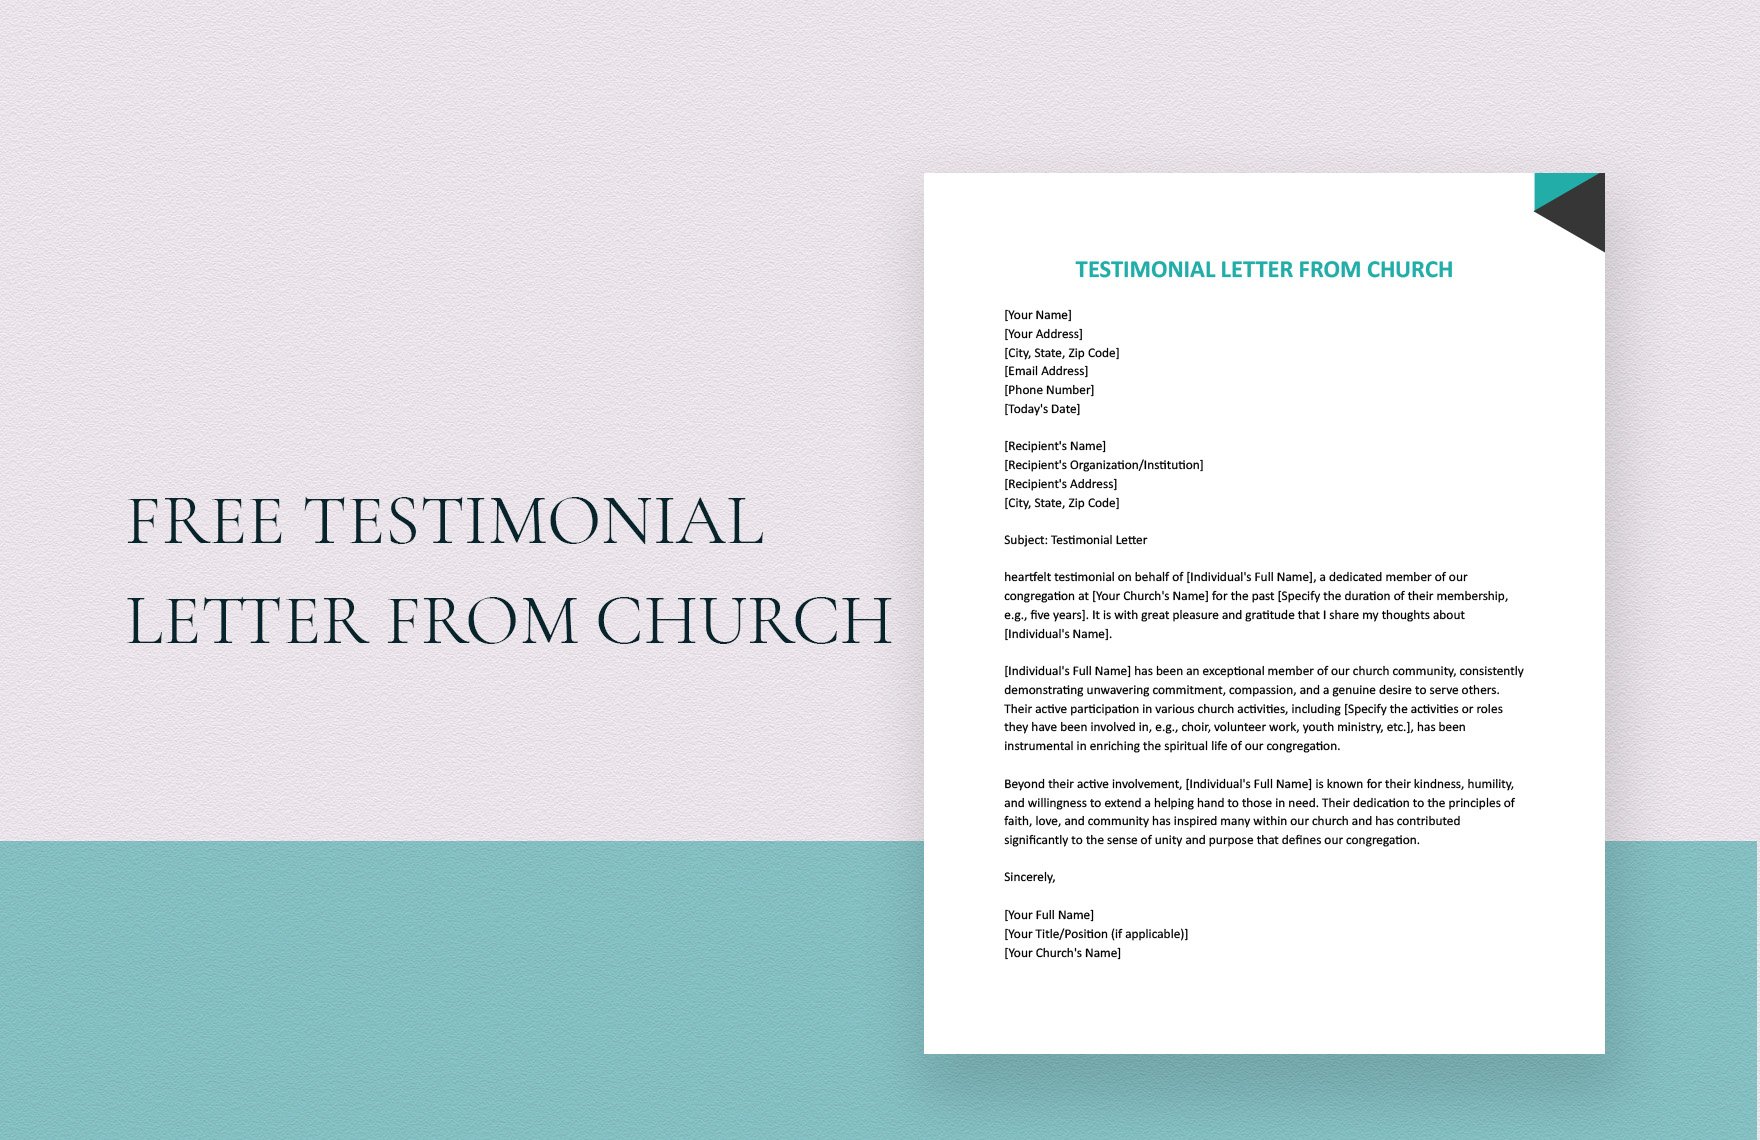 Testimonial Letter From Church